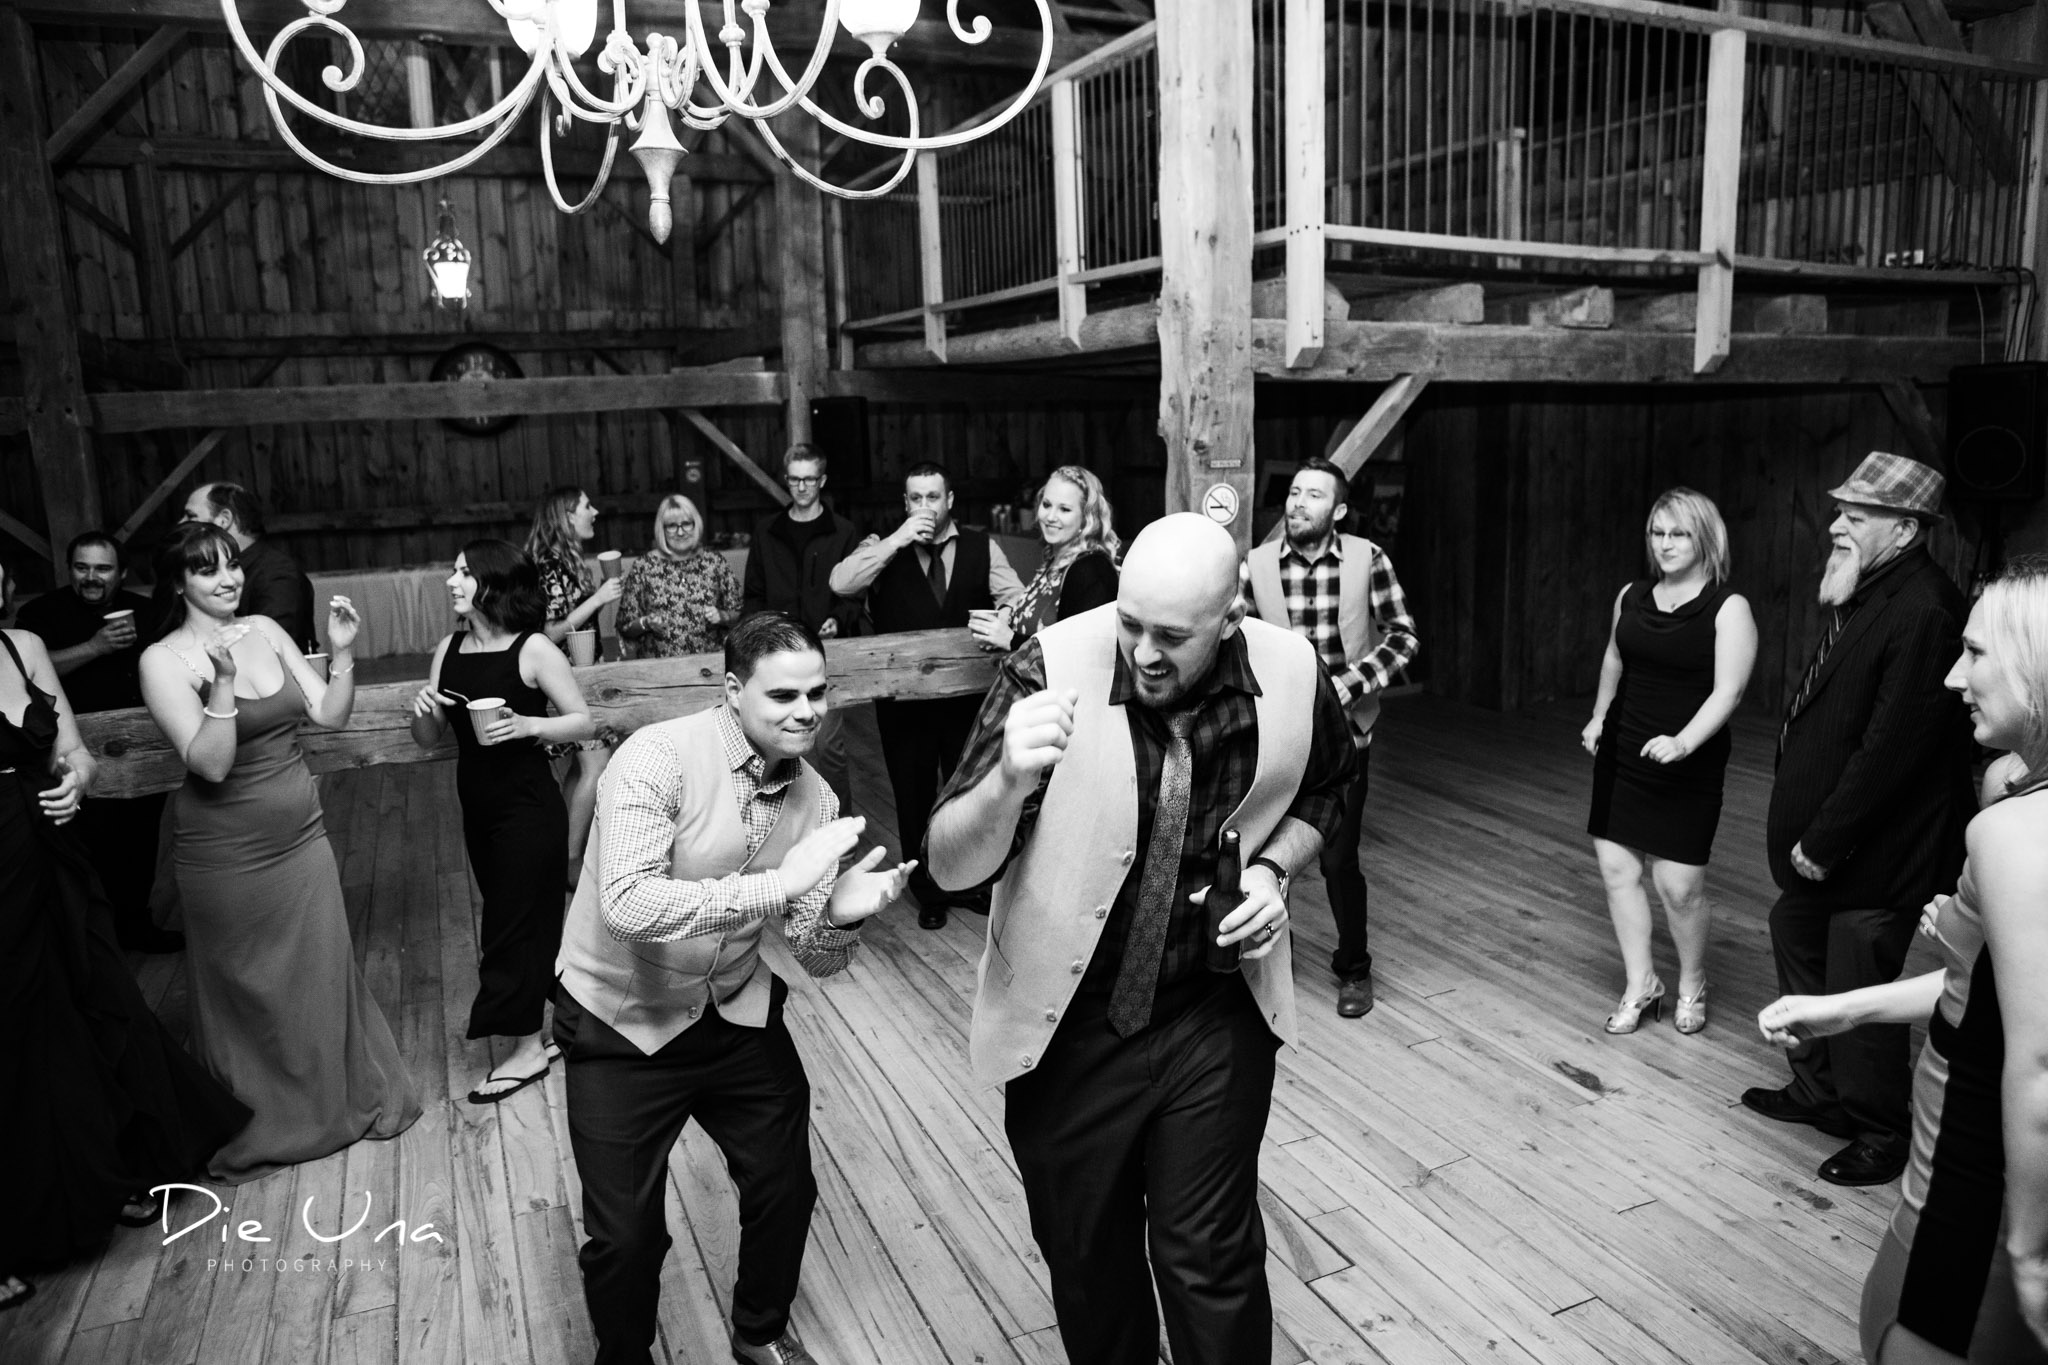 groom dancing in a circle of wedding guests in barn wedding reception.jpg